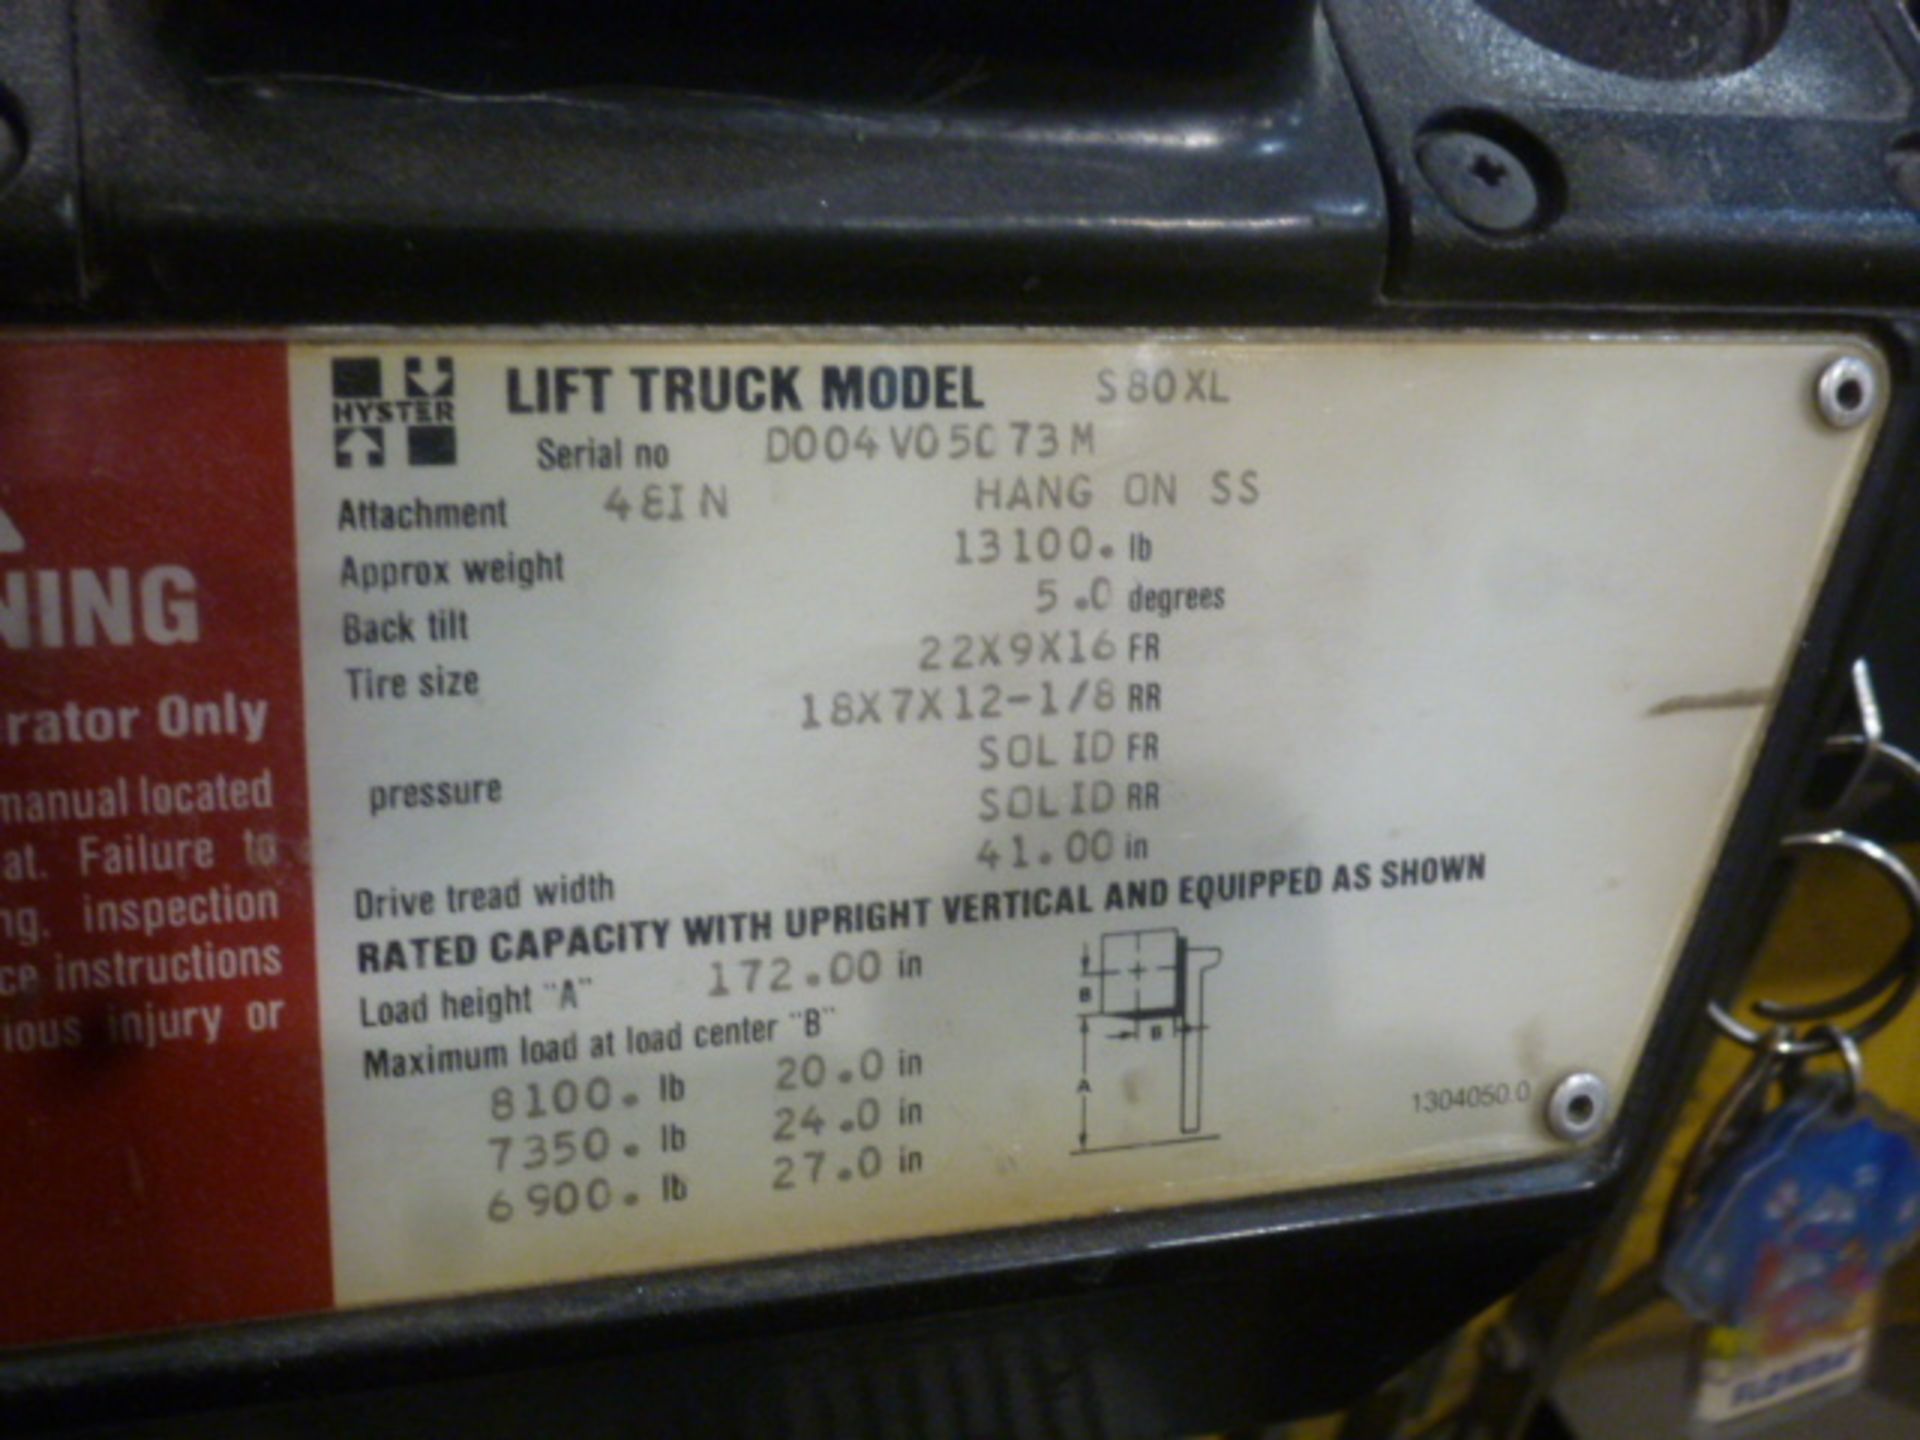 Hyster Forklift - 8,000# Capacity, Propane, m/n S80XL, s/n D004V05C73M, Hours: 1,875 - Image 2 of 2